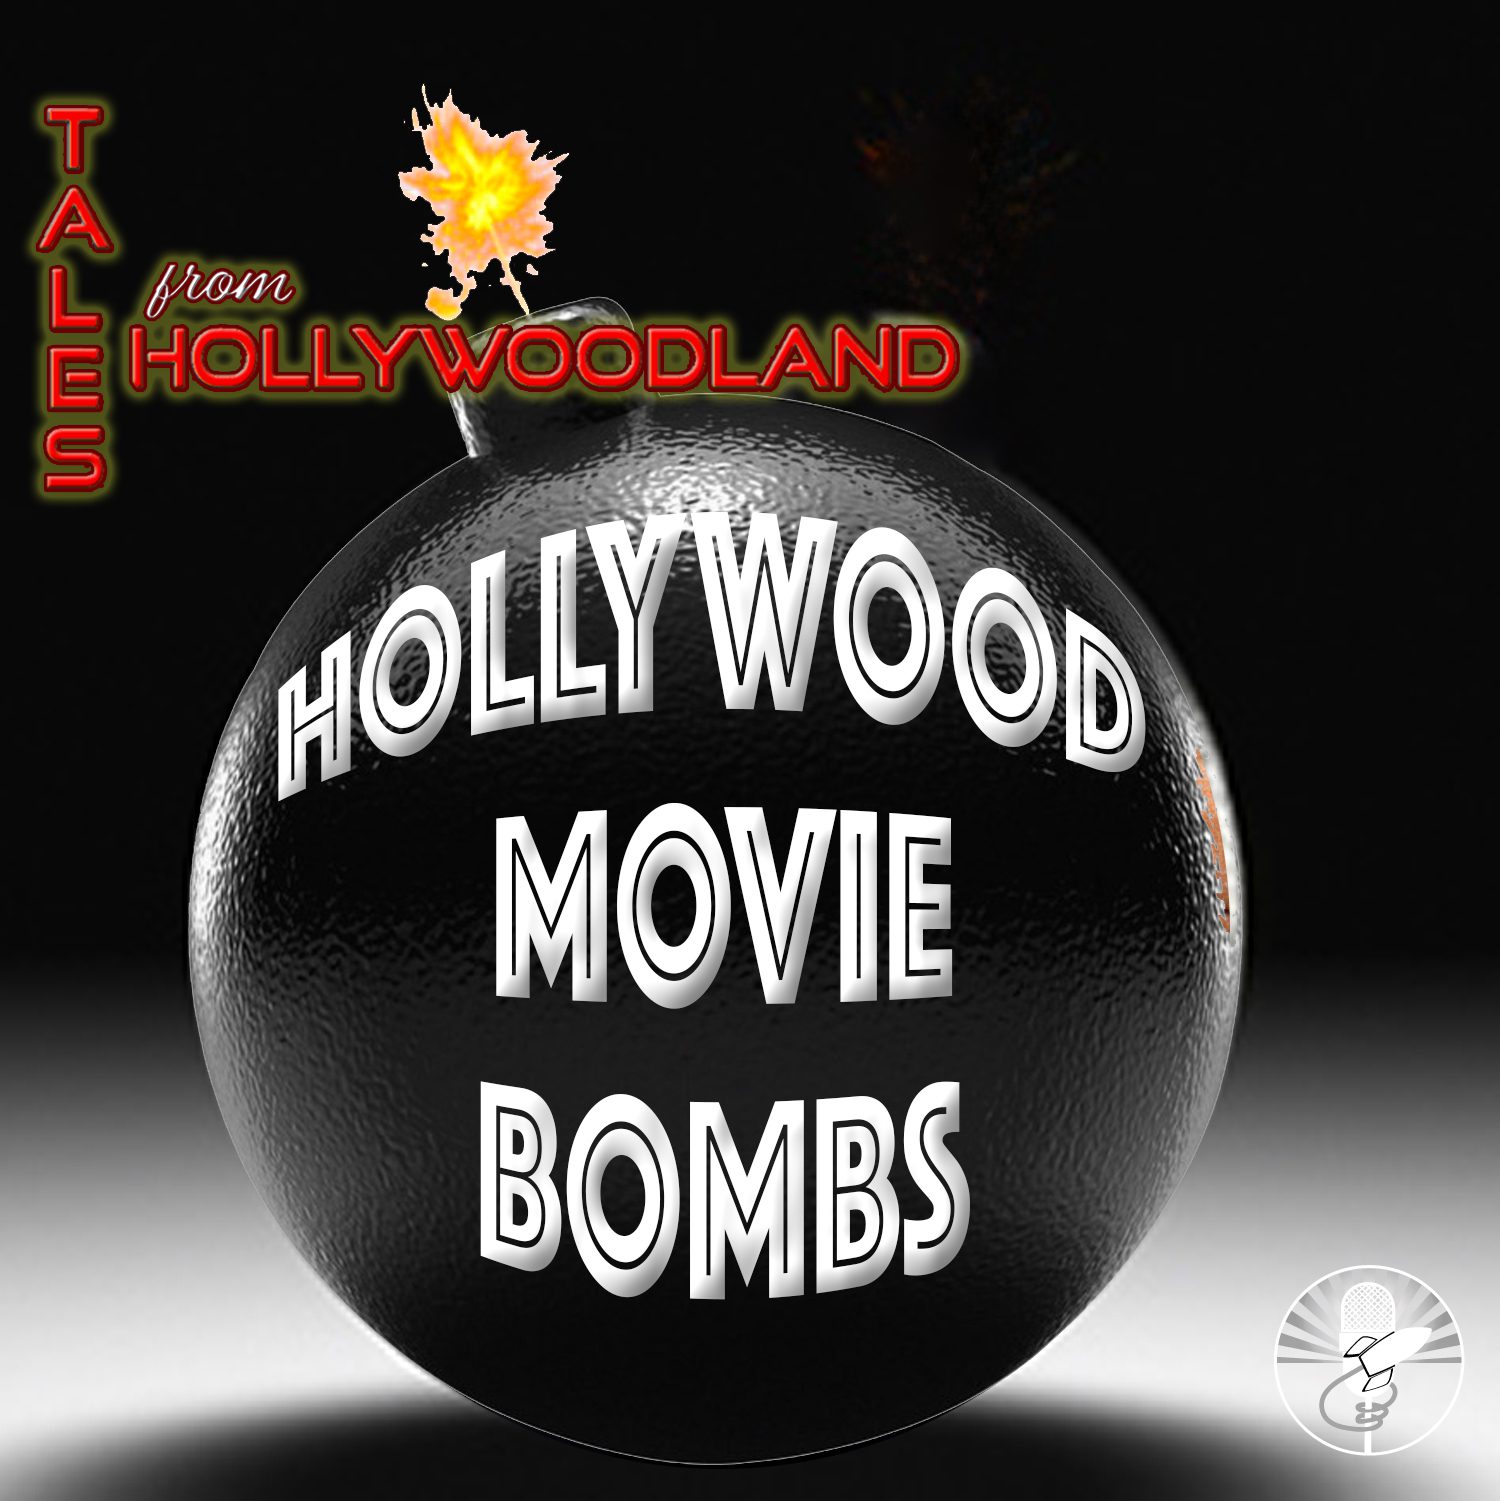 Universal Studios Hollywood Ride The Movies Retro Logo 30th Anniversary  Poster | eBay